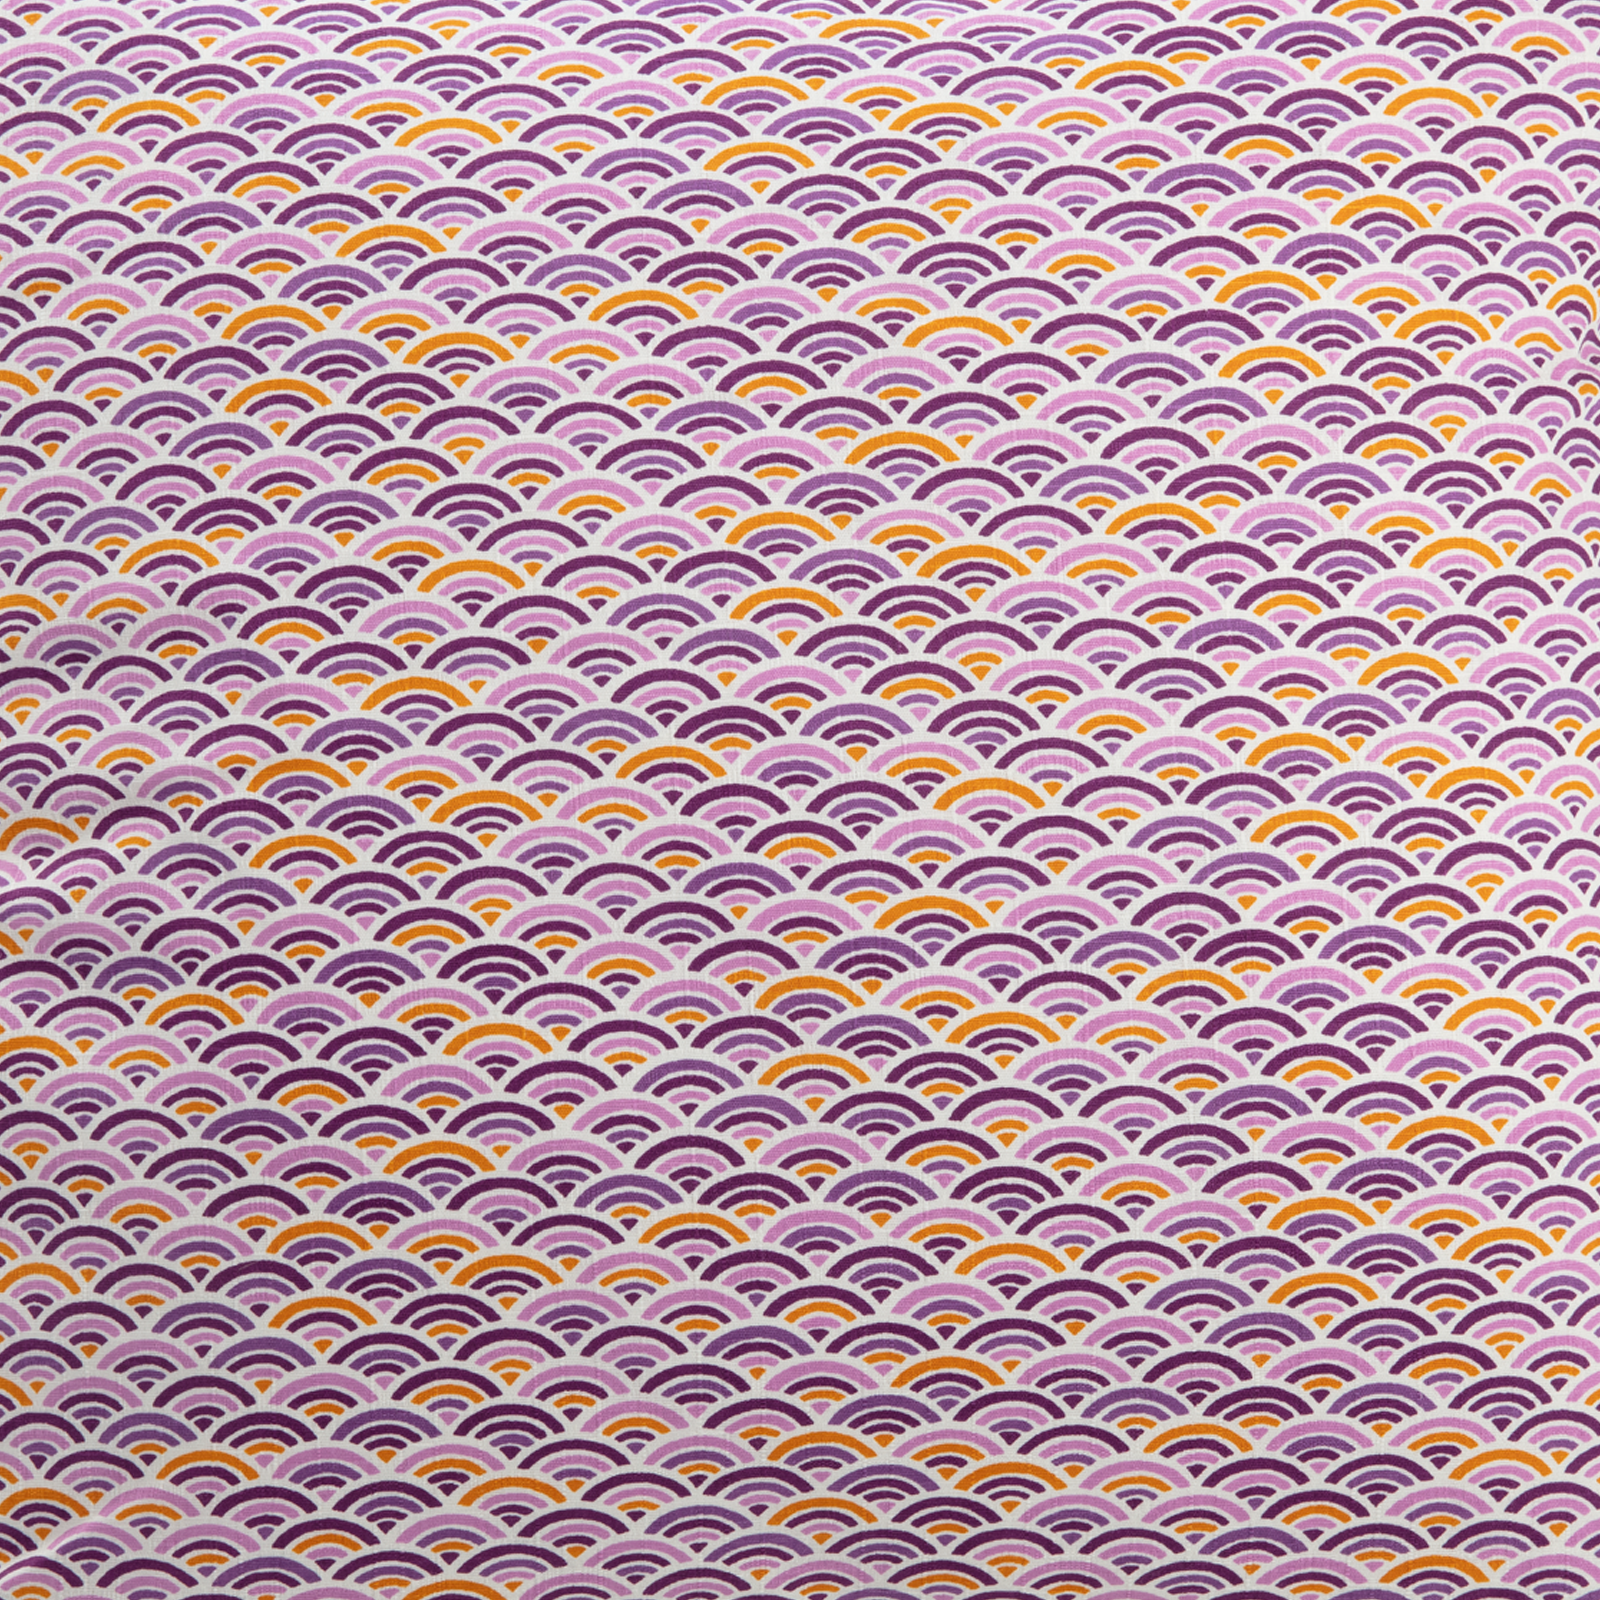 Imported Japanese Fabric - Colorful Seika Ha Purple_Fabric_Imported from Japan_100% Cotton_Japanese Sleep System